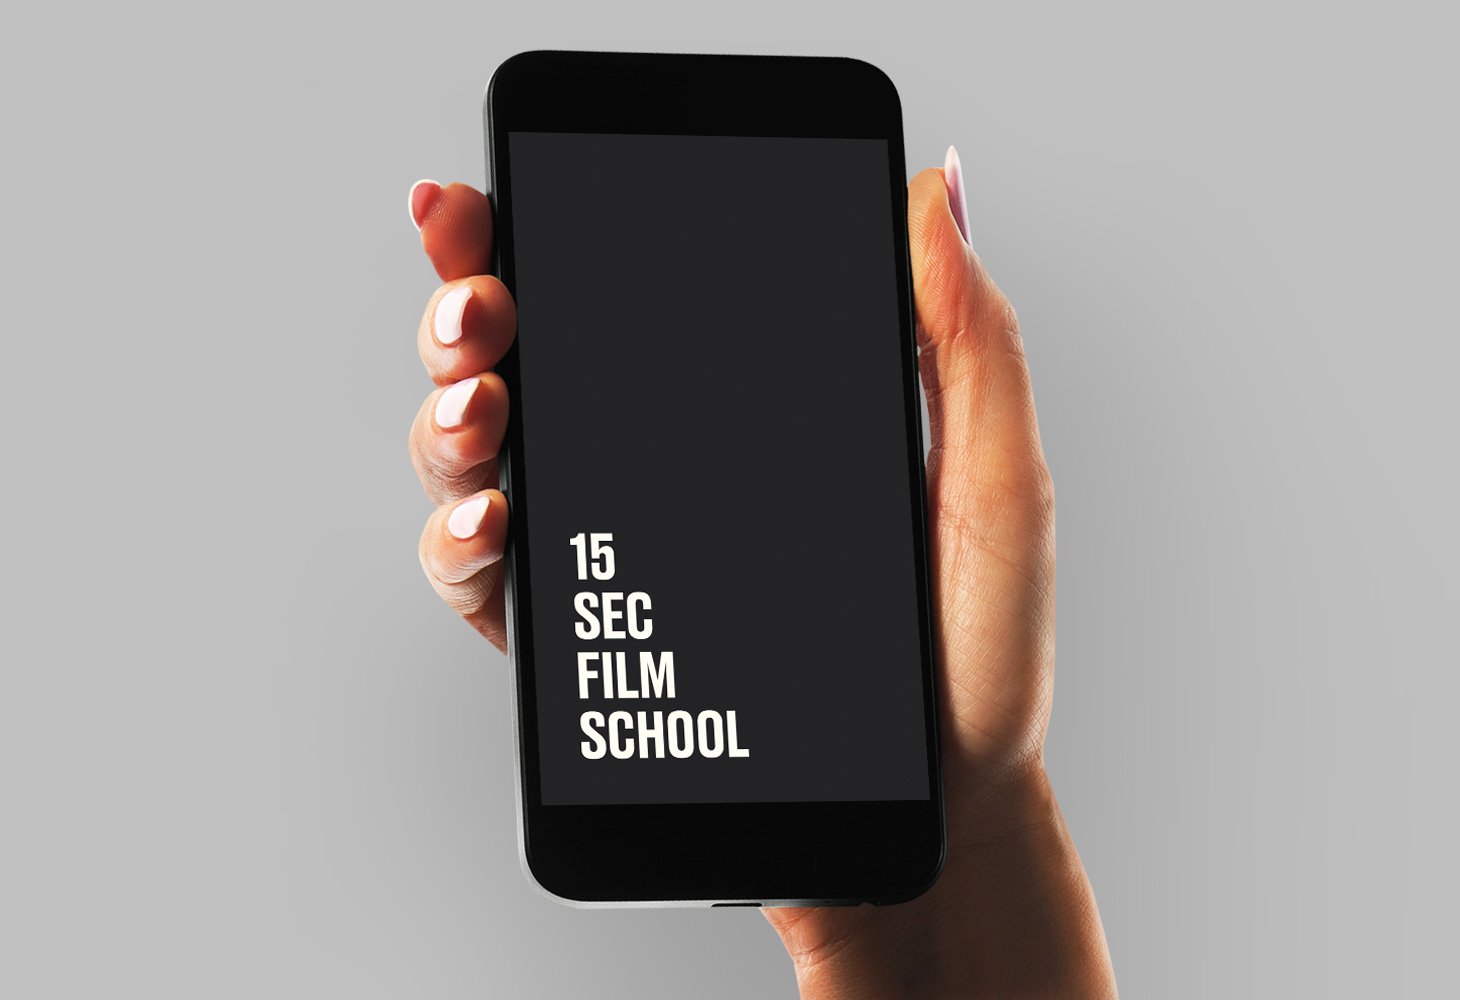 5 Sec Film School - Vice x Instagram - Ident